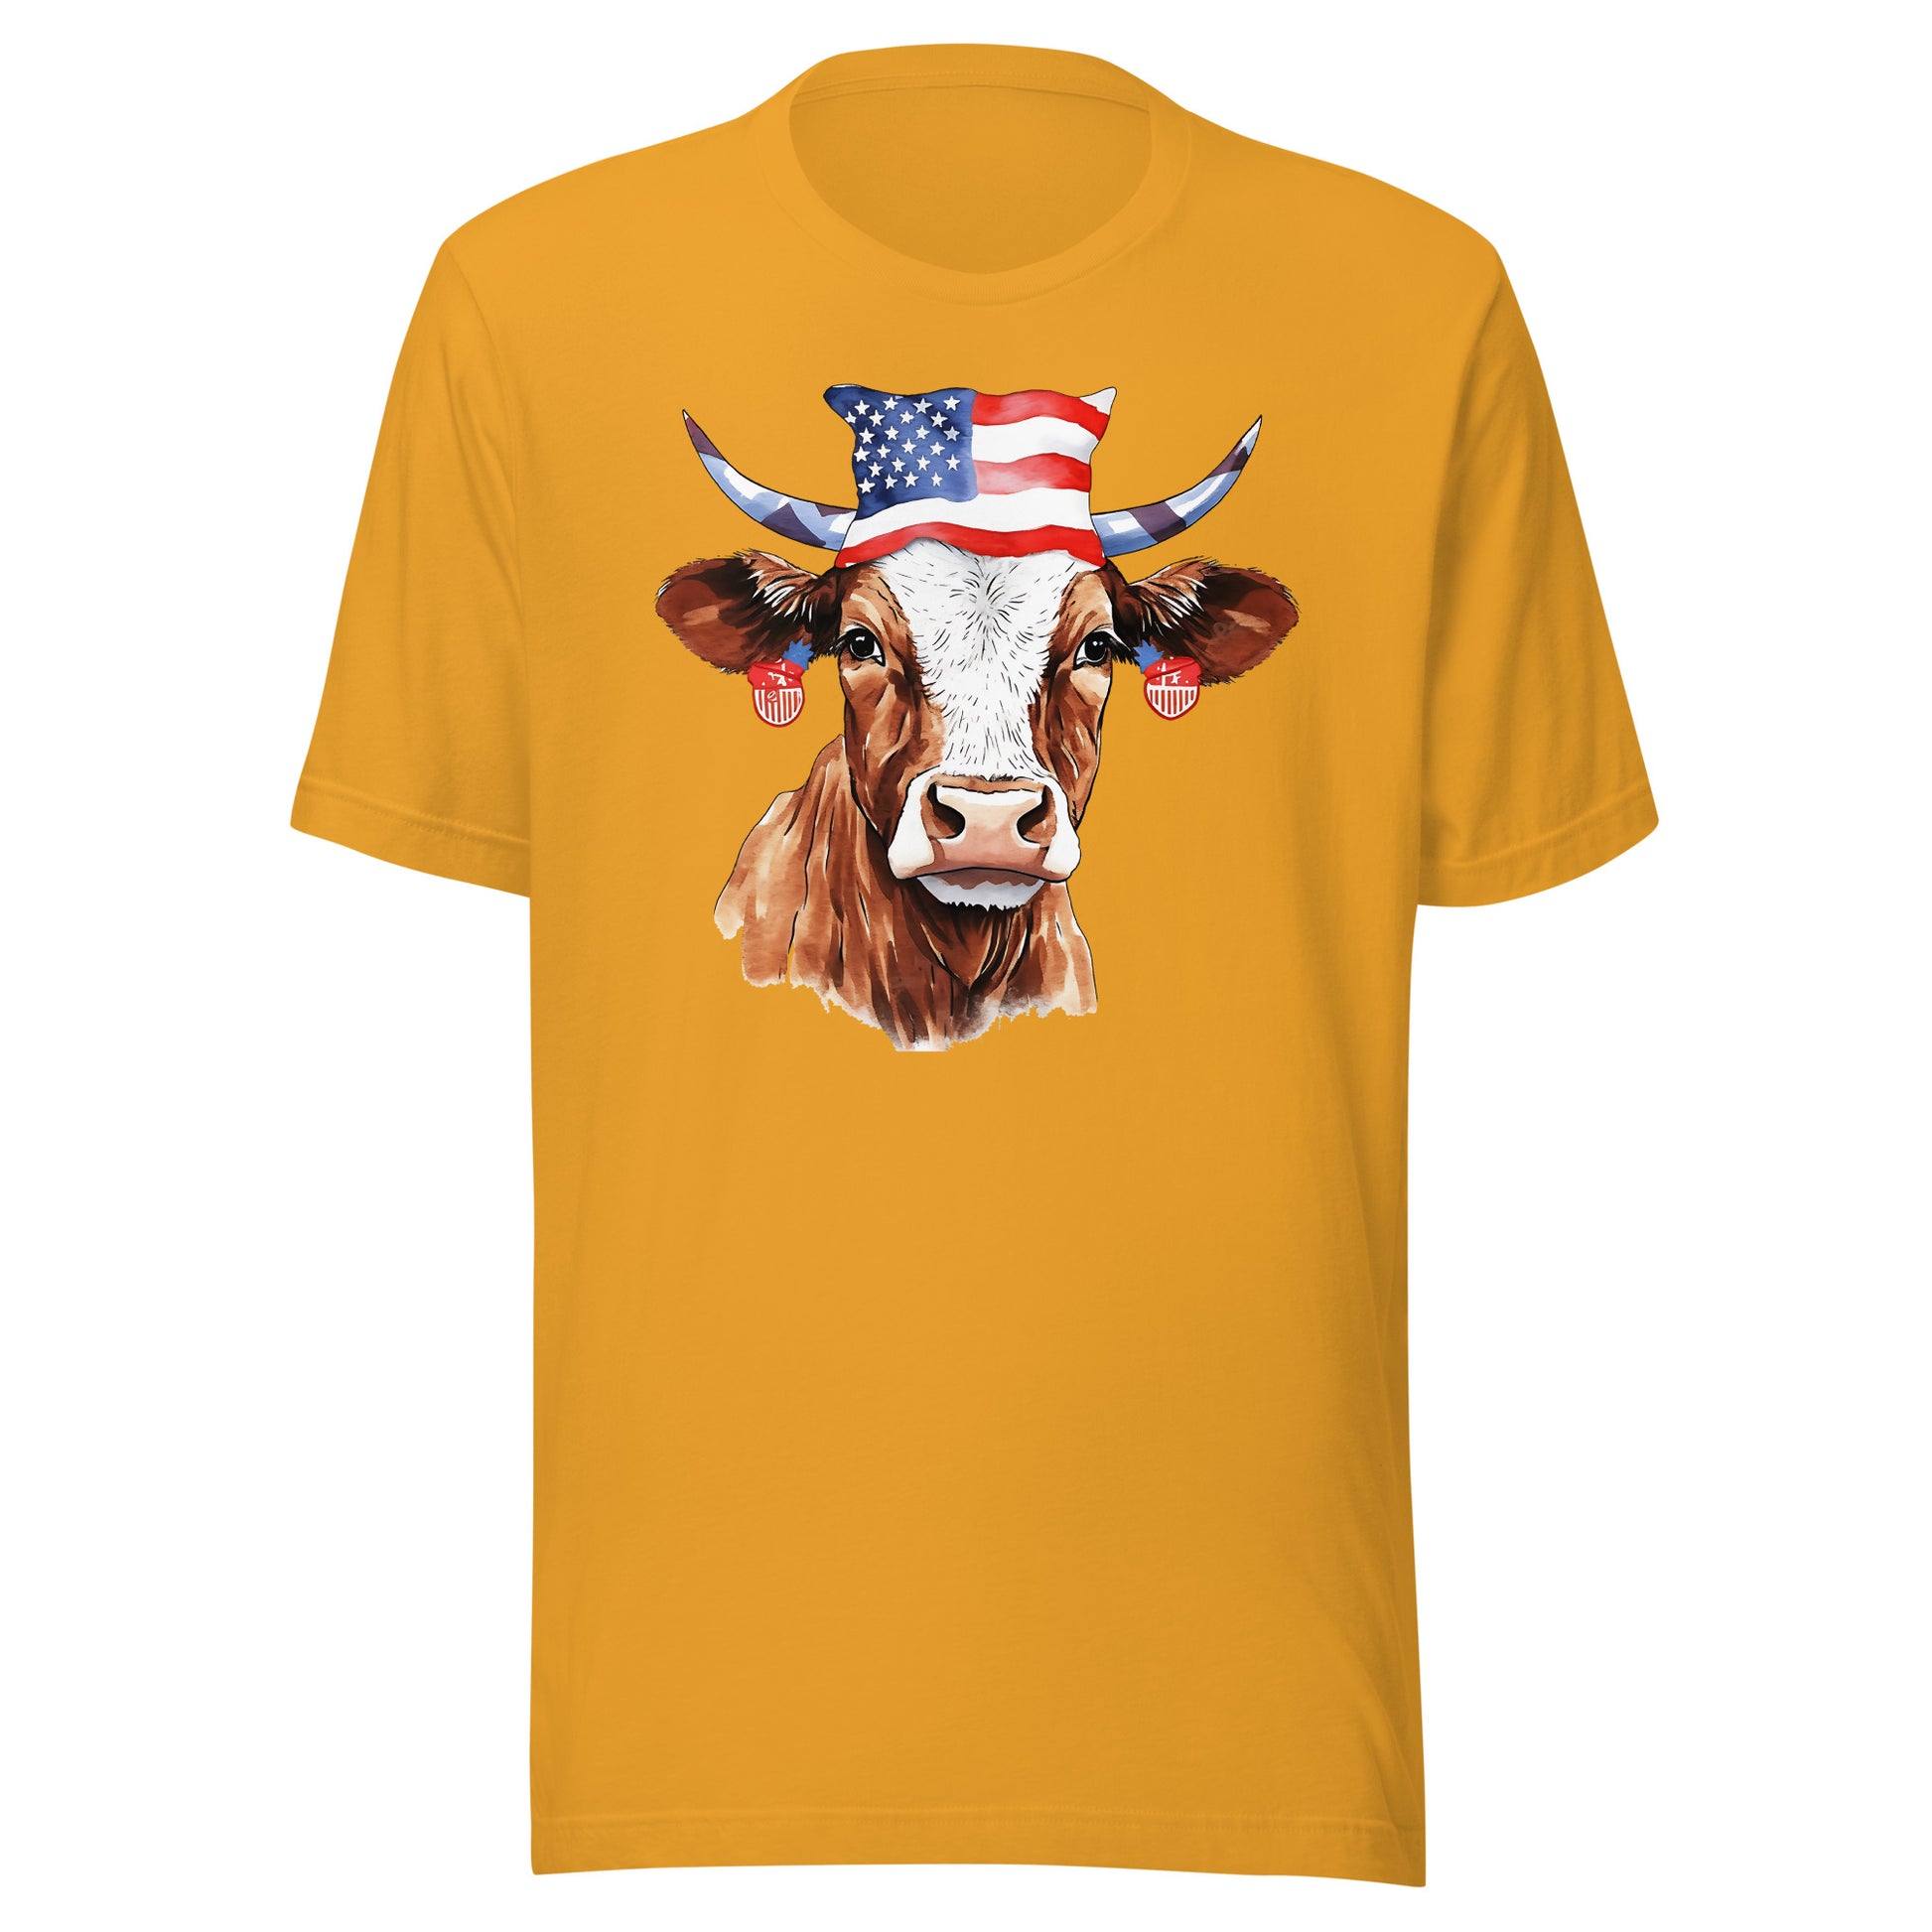 Patriotic Cow Tshirt For Cow Lovers Mustard Color